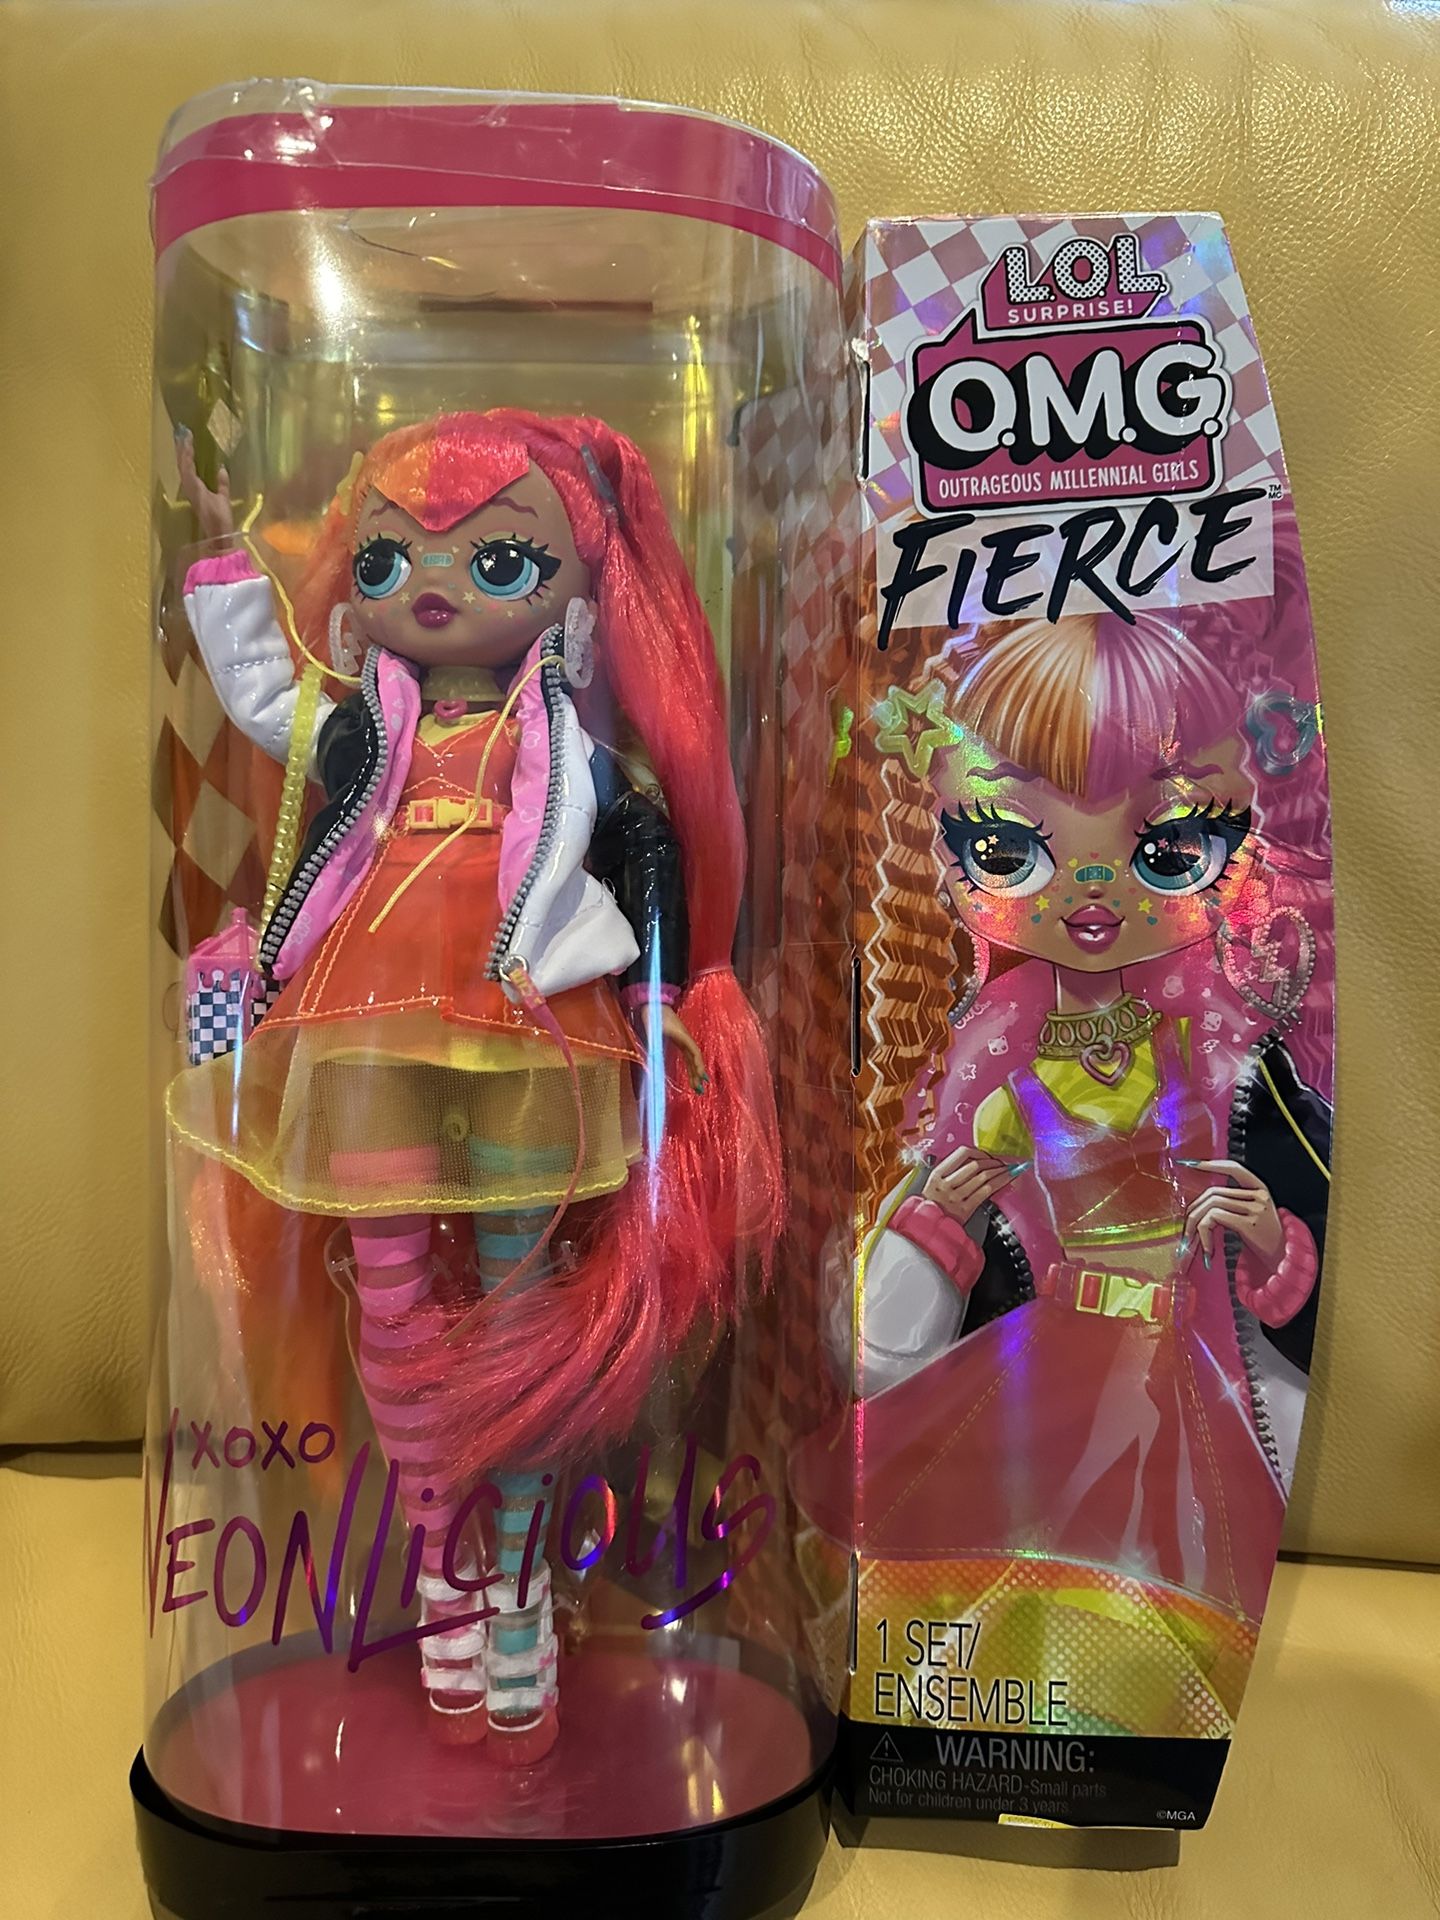 Super Hot Lol Omg Surprise Neonlicious Fierce Doll New